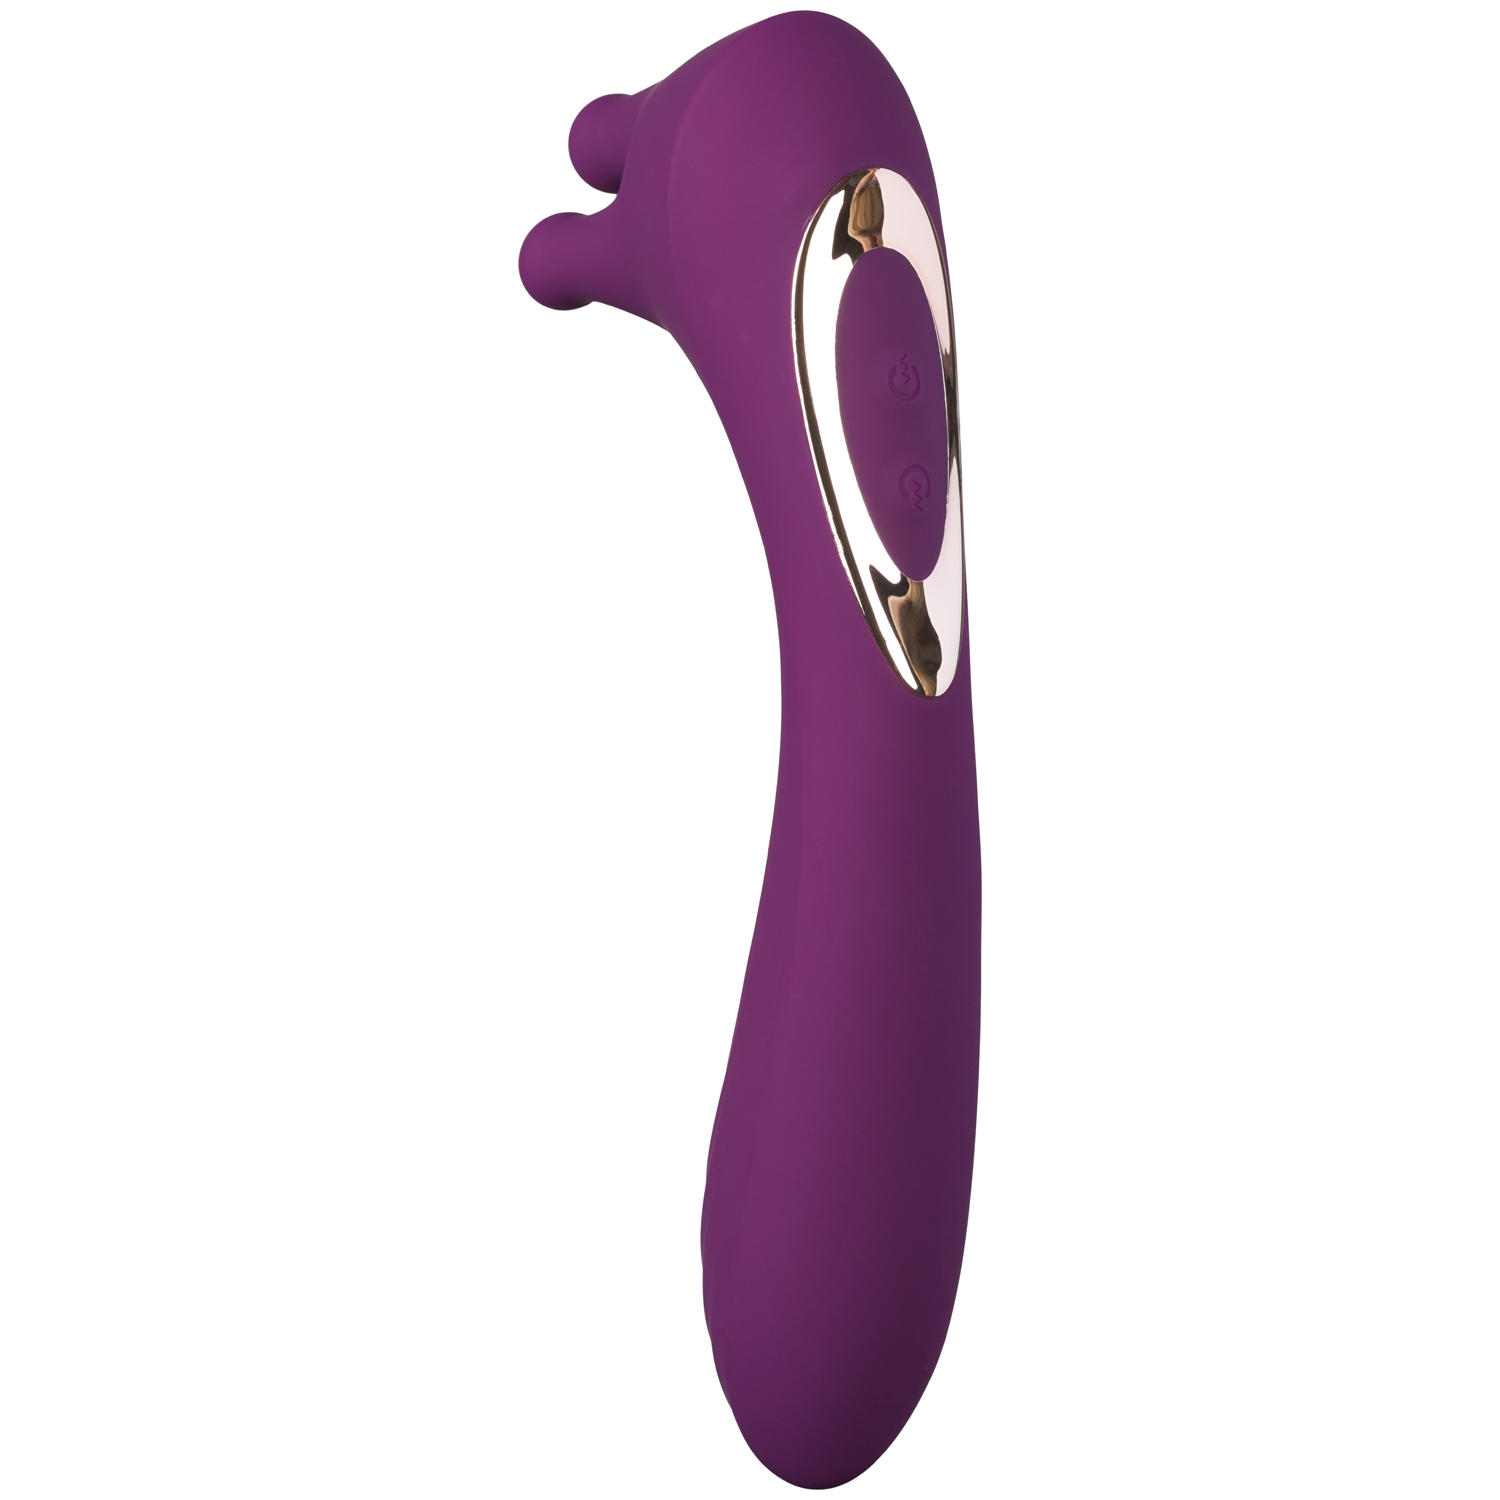 Tracy's Dog Goldfinger G-punkts Vibrator       - Purple